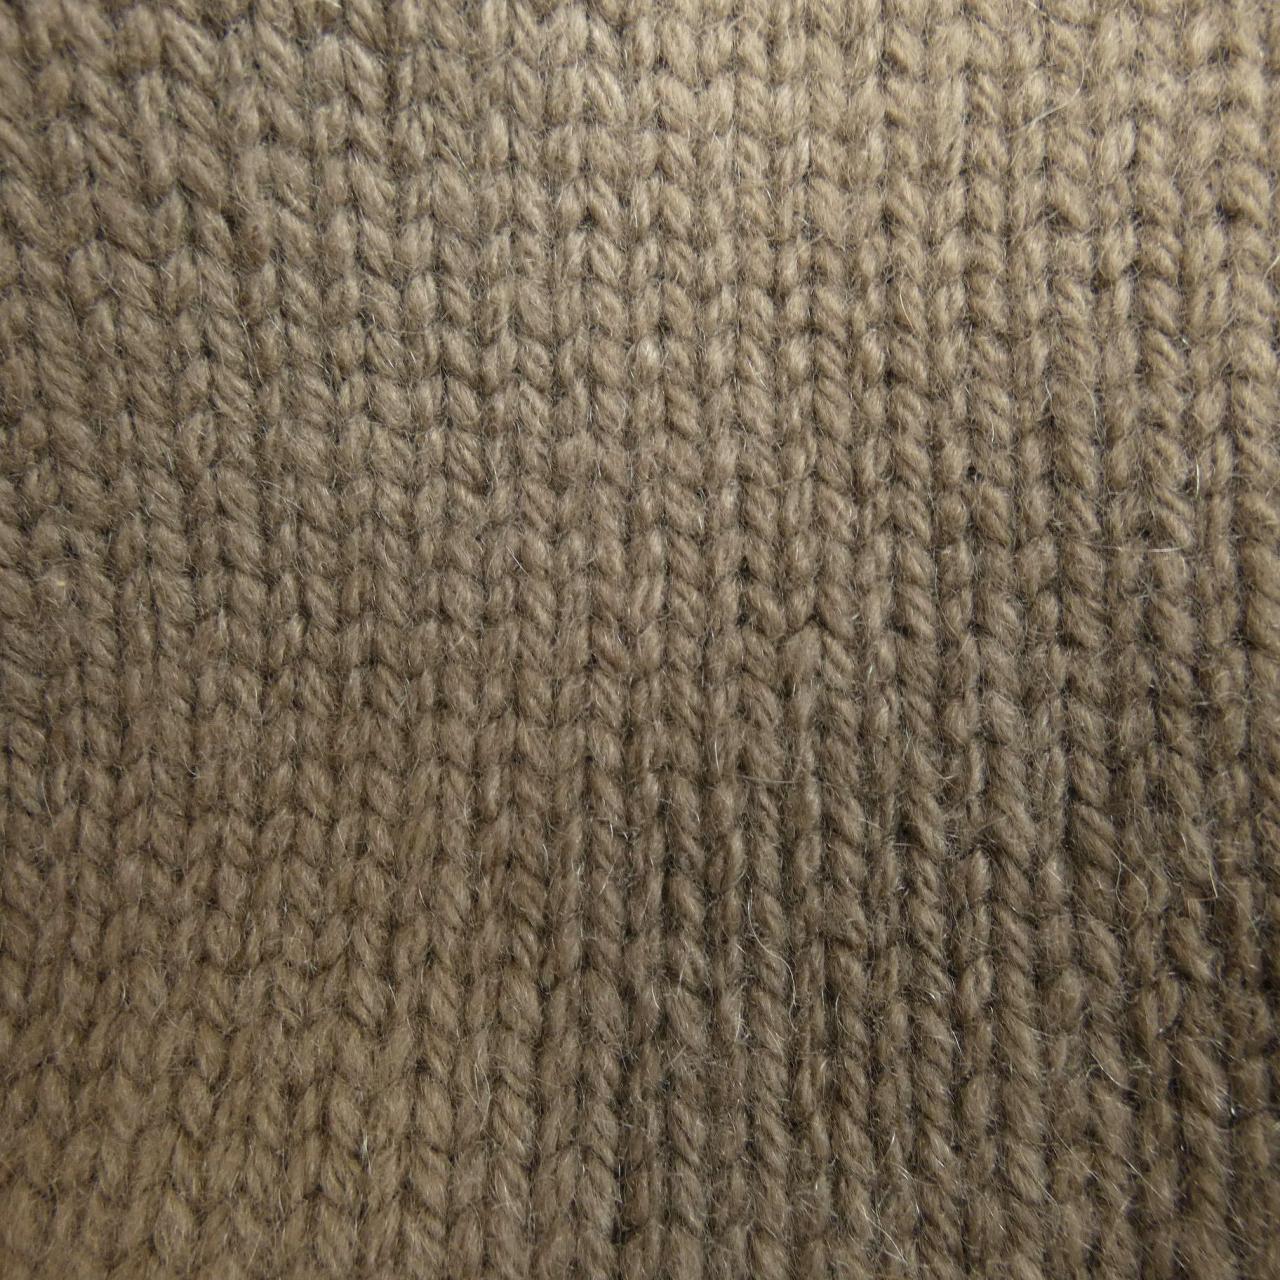 CELINE celine knit